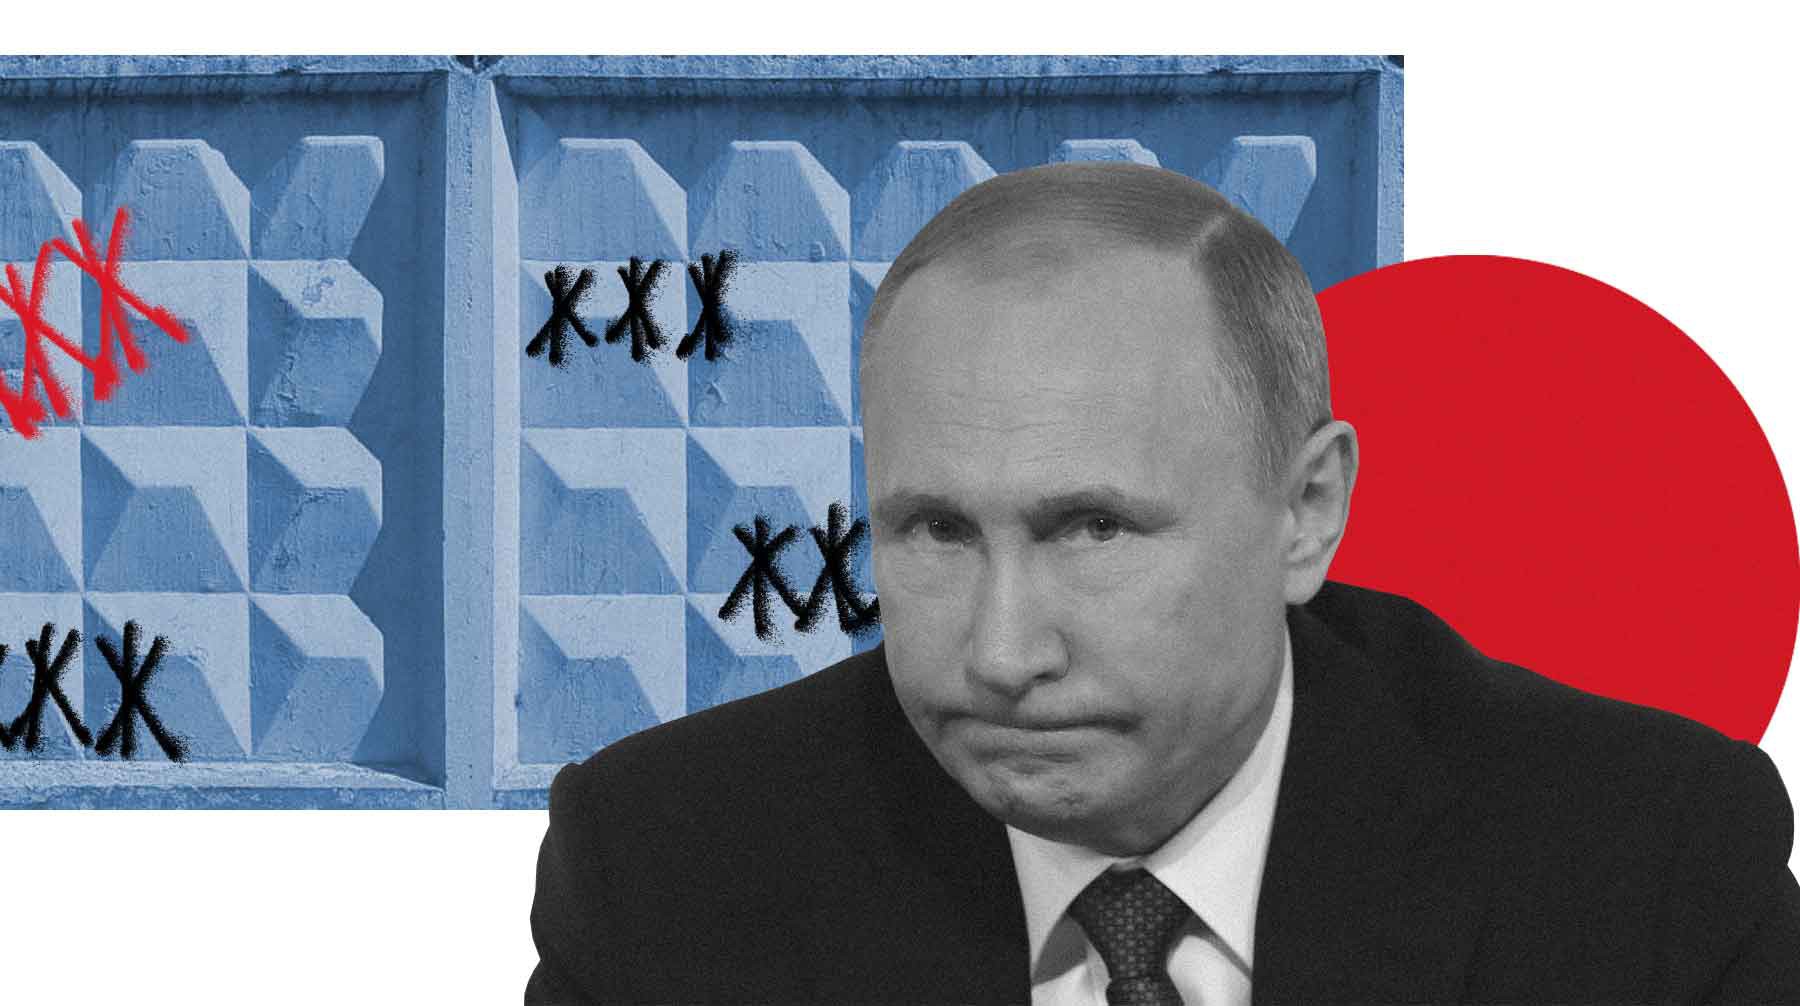 Dailystorm - Автора фотографии надписи «Путин — *****» наказали за оскорбление президента